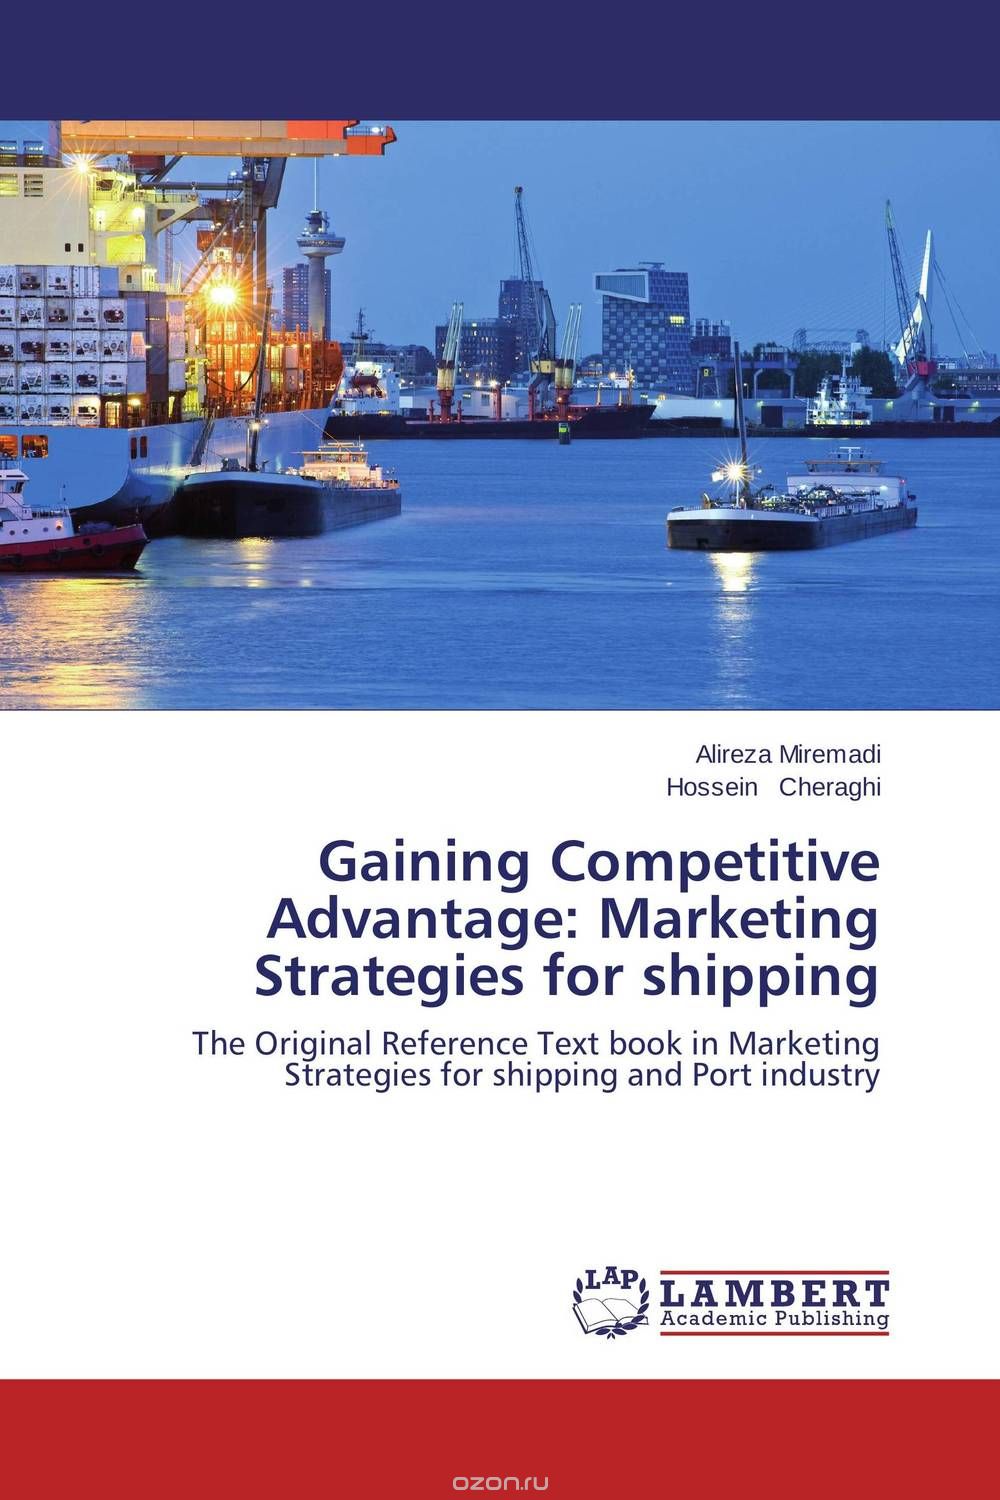 Скачать книгу "Gaining Competitive Advantage: Marketing Strategies for shipping"